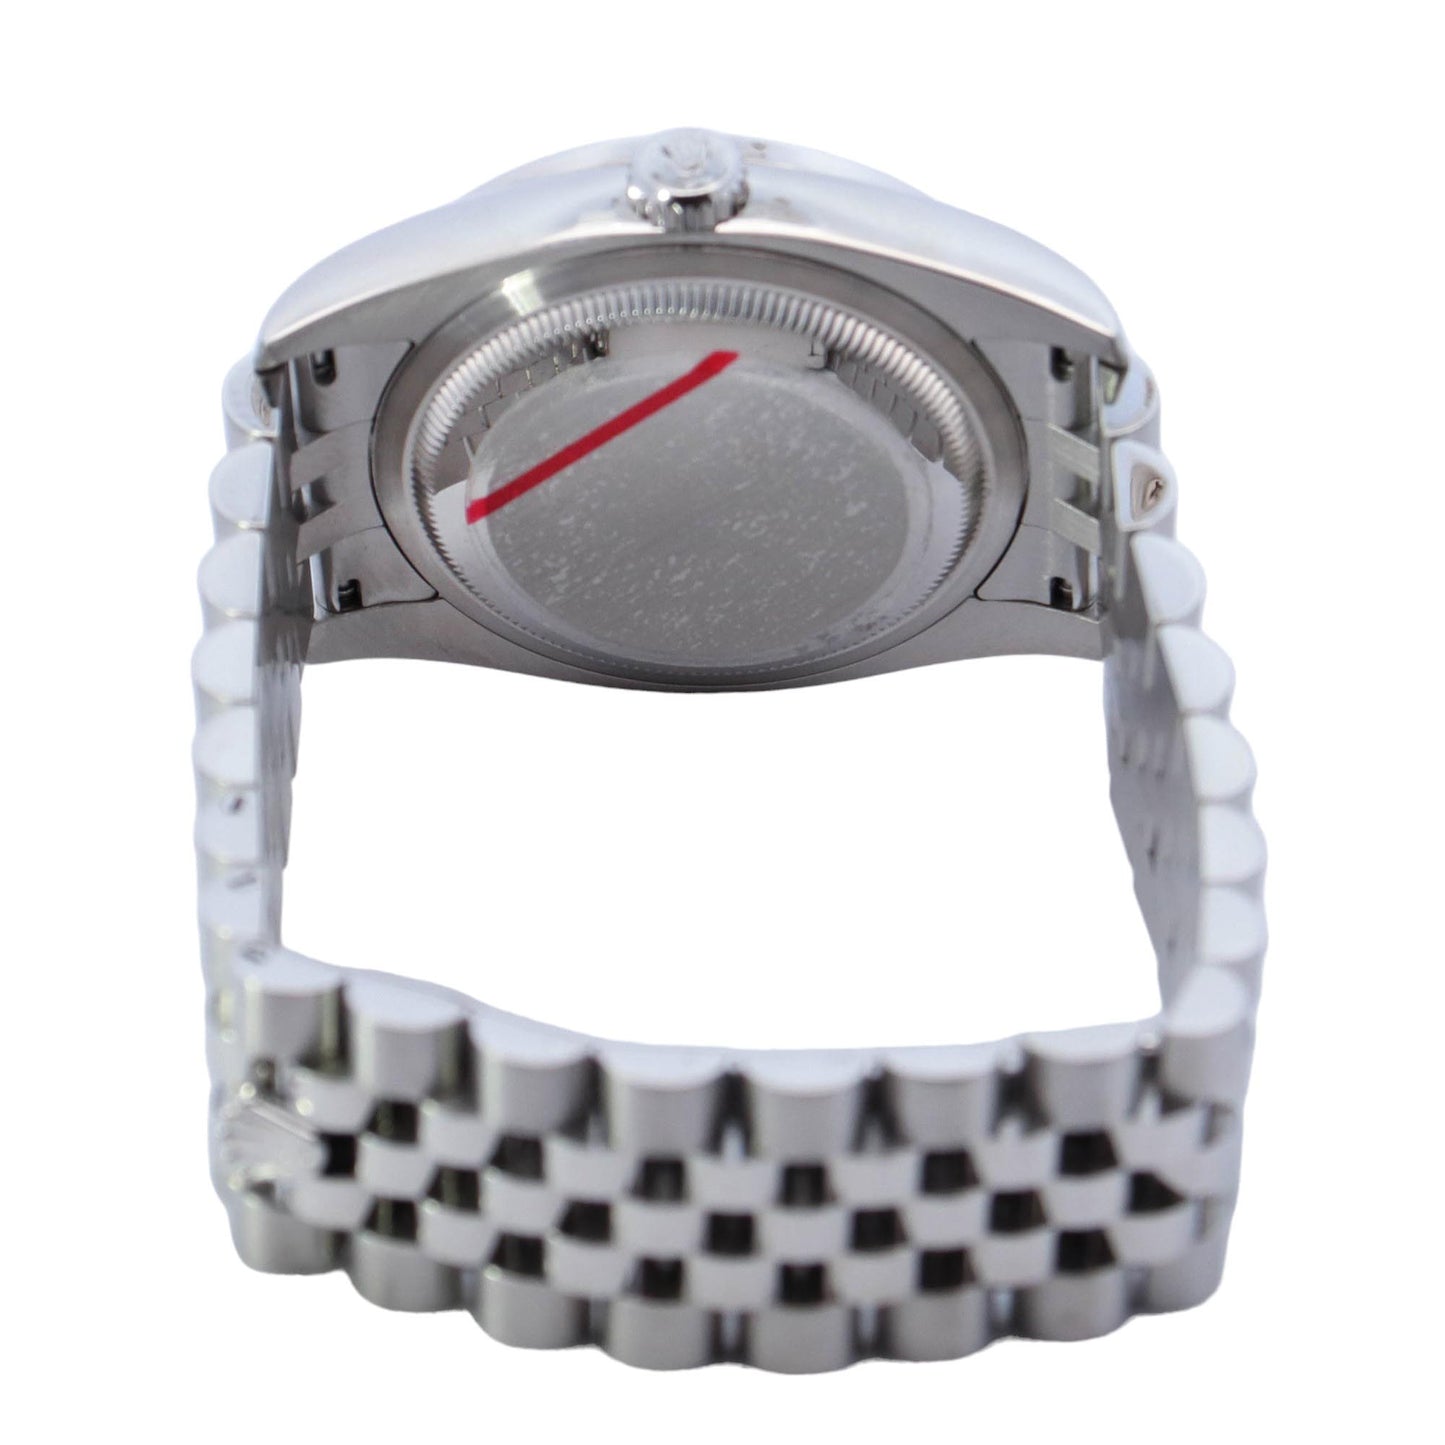 Rolex Datejust 36mm Stainless Steel Silver Stick Dial Watch Reference# 116234 - Happy Jewelers Fine Jewelry Lifetime Warranty